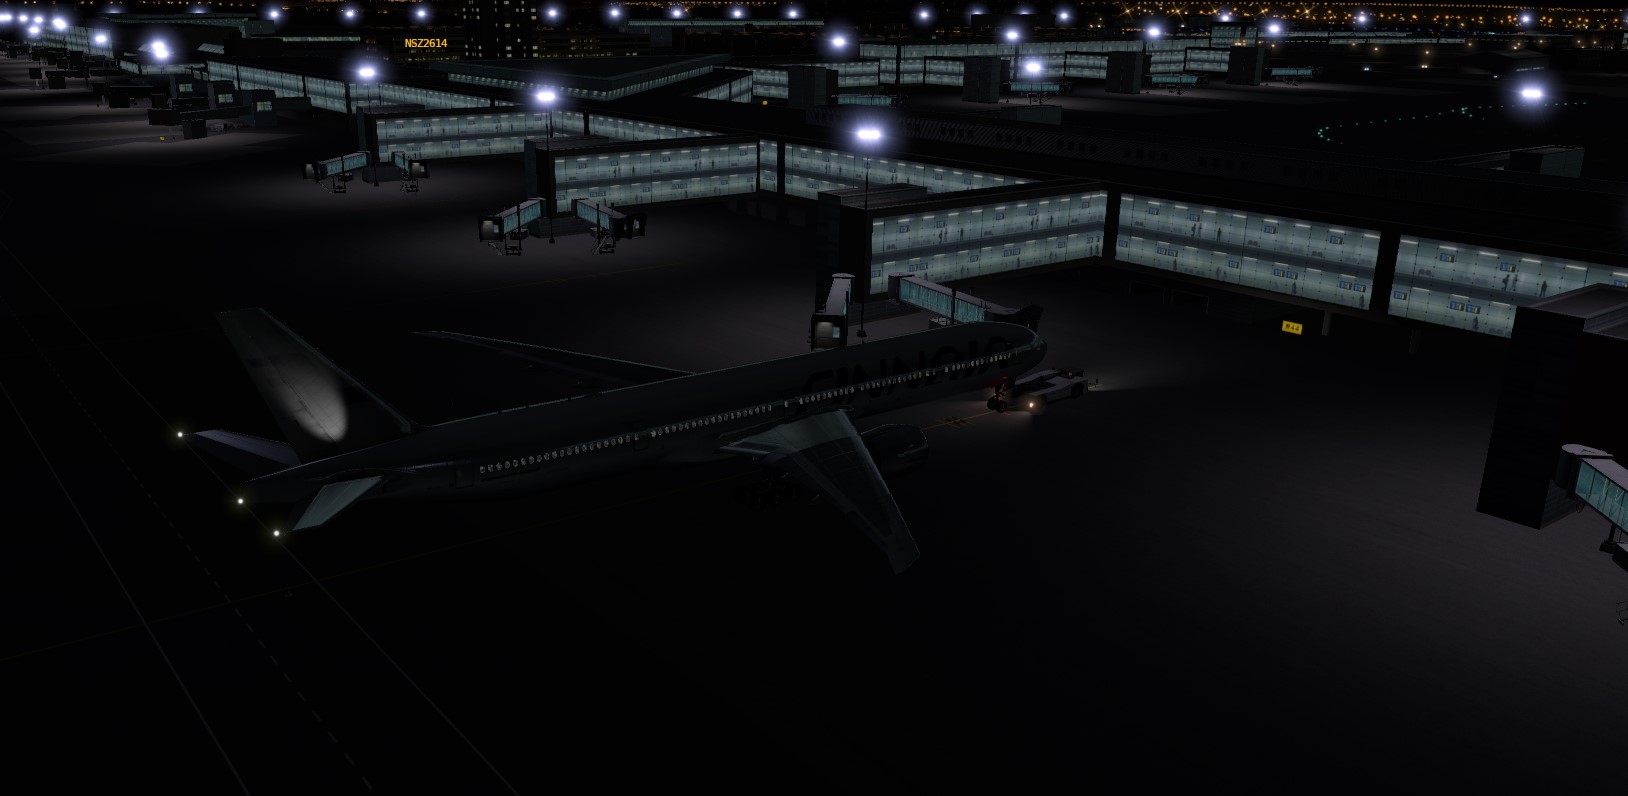 Getting ready for third flight, it seems I always depart in the dark